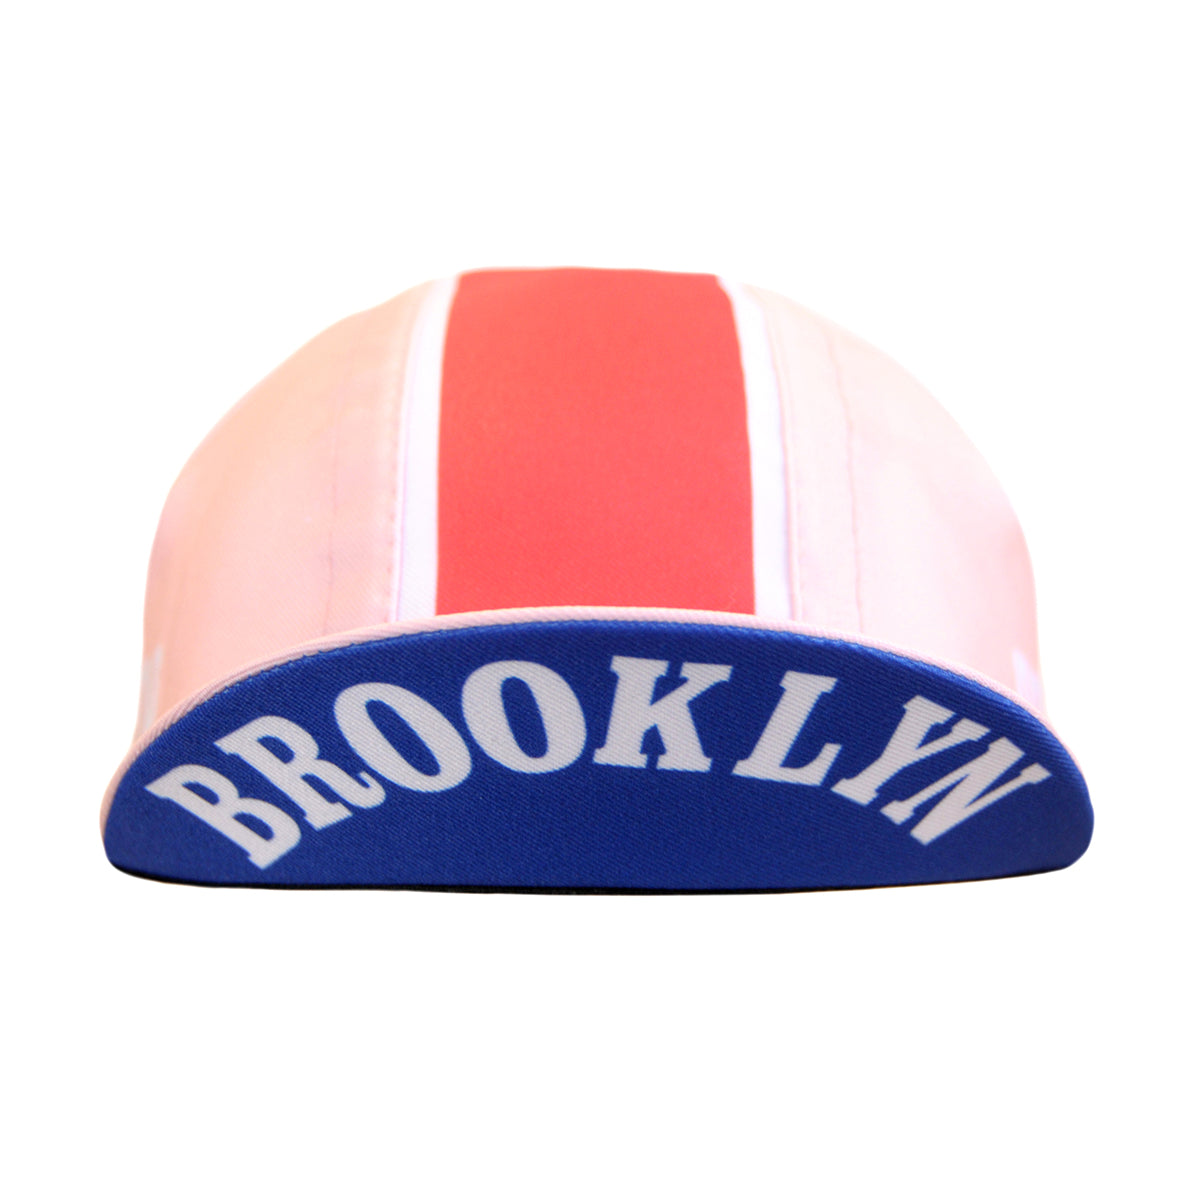 Headdy Brooklyn Cycling Cap - Men